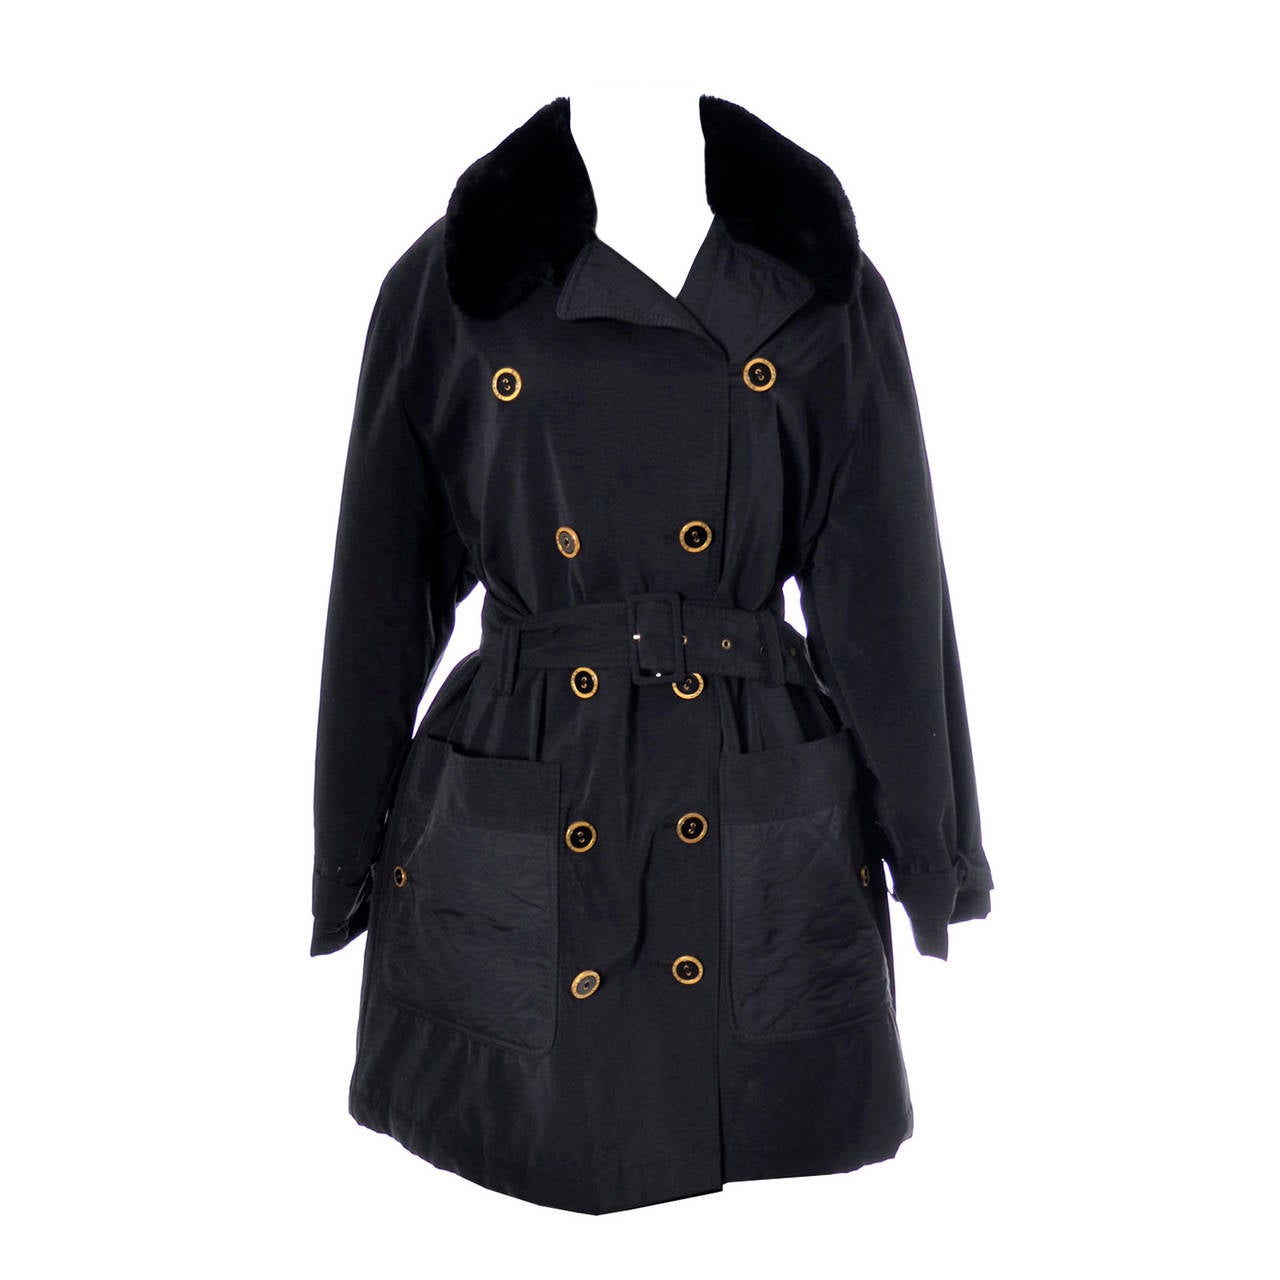 Sonia Rykiel Paris Vintage Jacket Trench Coat Faux Fur Trim Raincoat